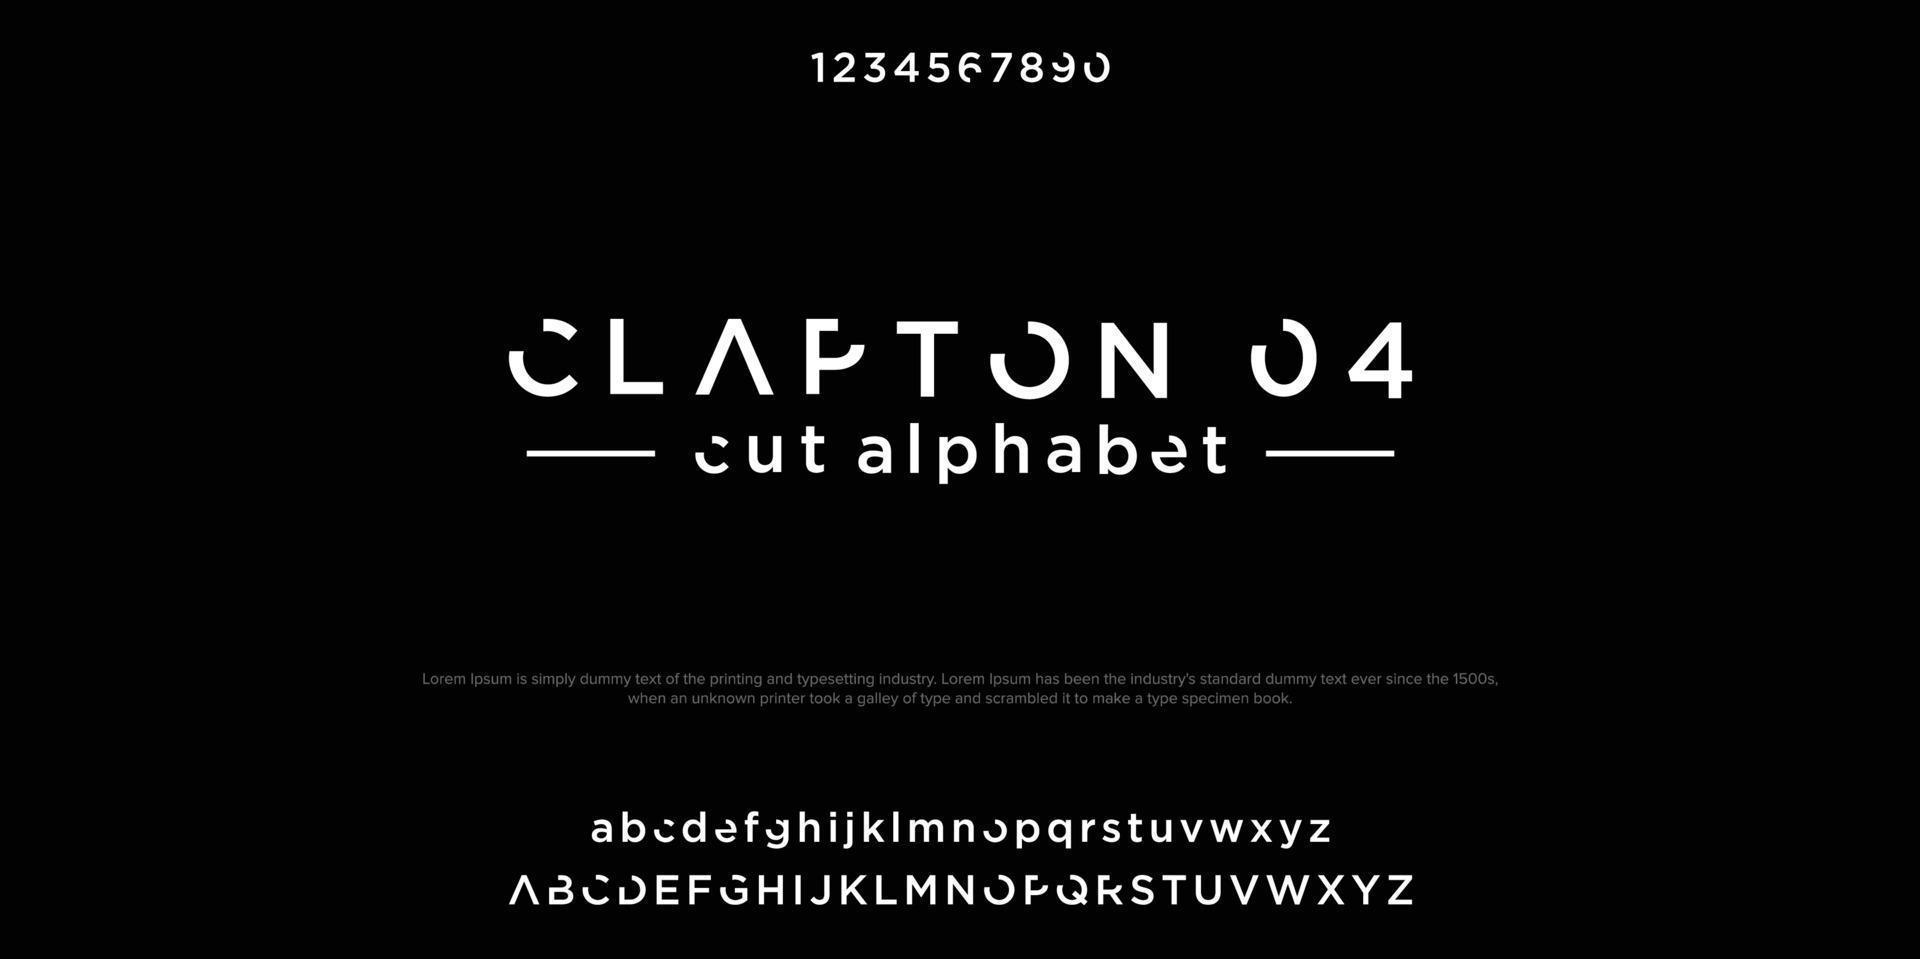 CLAPTON 04 Abstract minimal modern alphabet fonts. Typography technology vector illustration